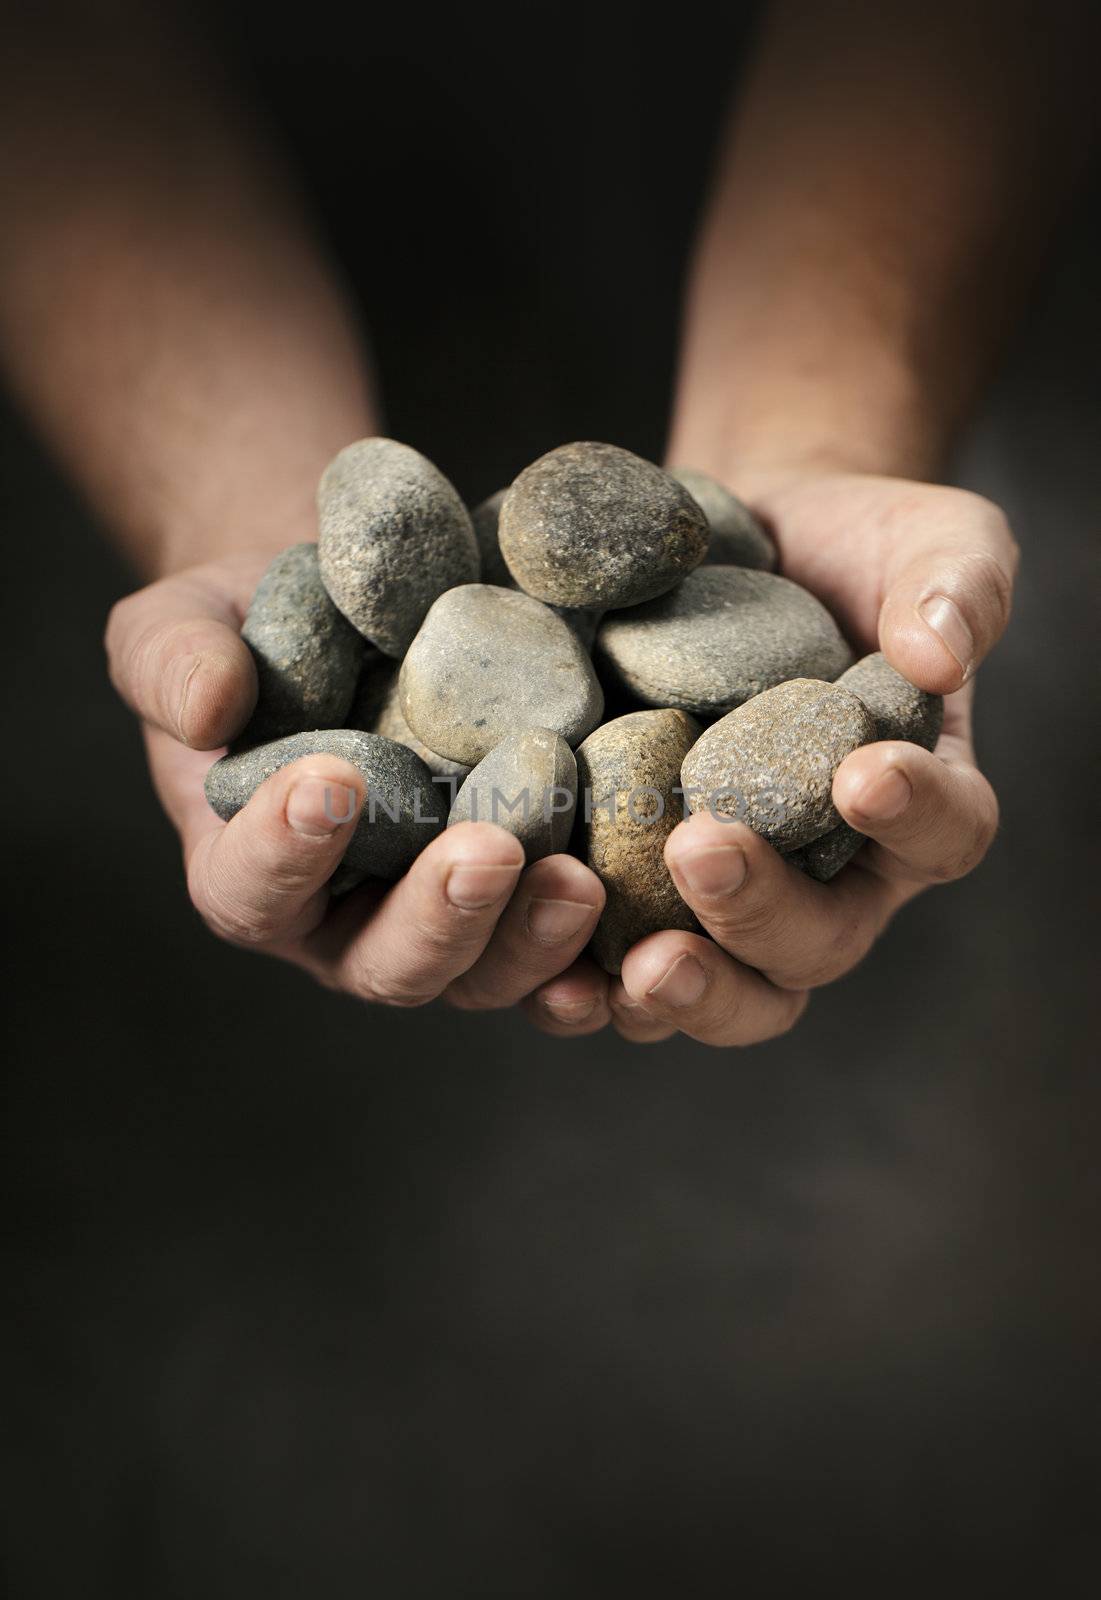 Hands full of rocks by Stocksnapper